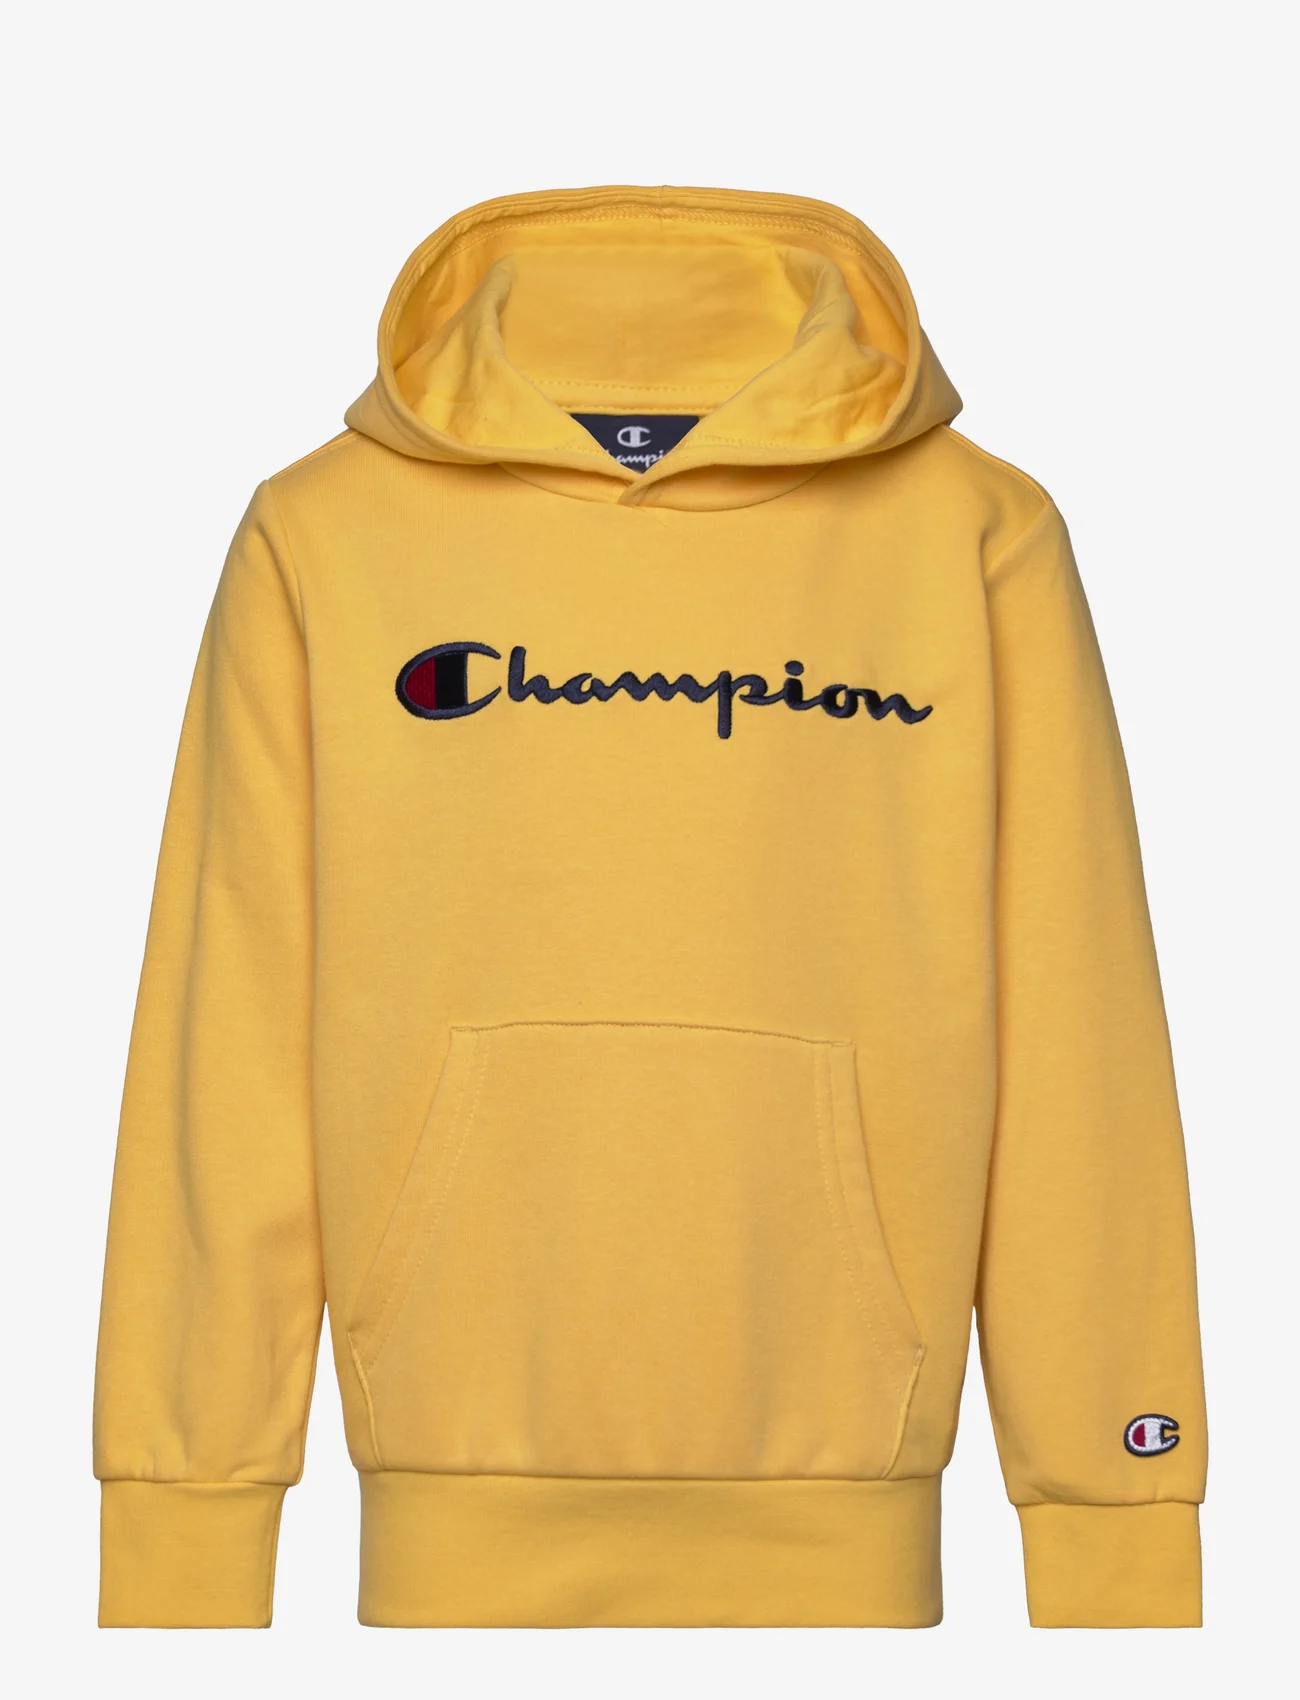 Champion - Hooded Sweatshirt - hoodies - banana - 0